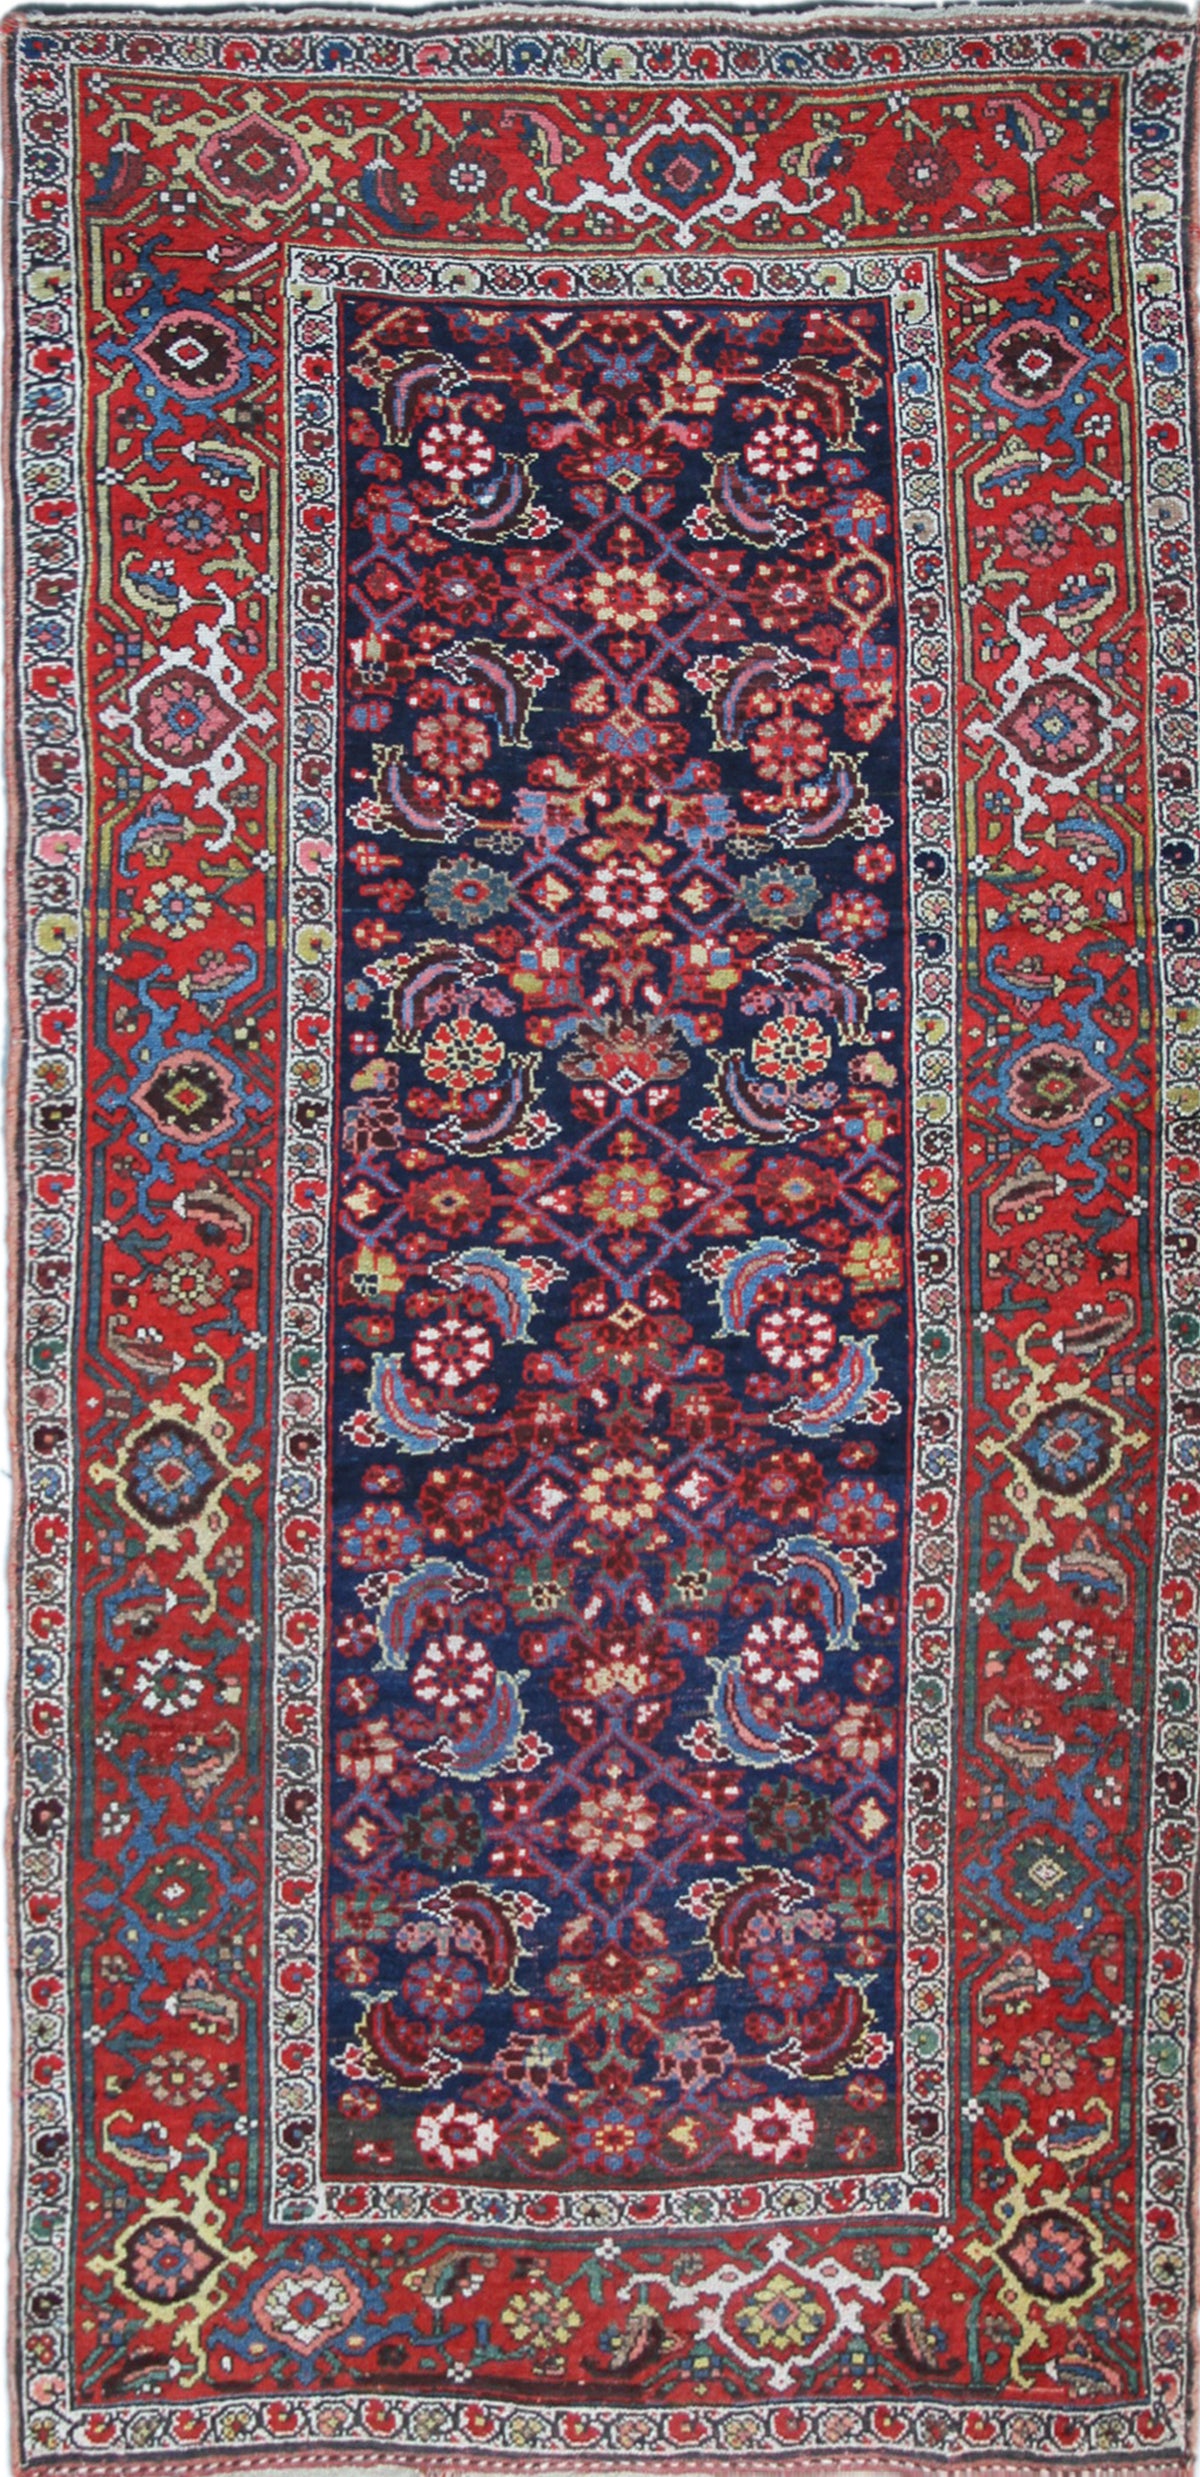 4'x8' Blue Red Border Herati Design Vintage Persian Runner Rug